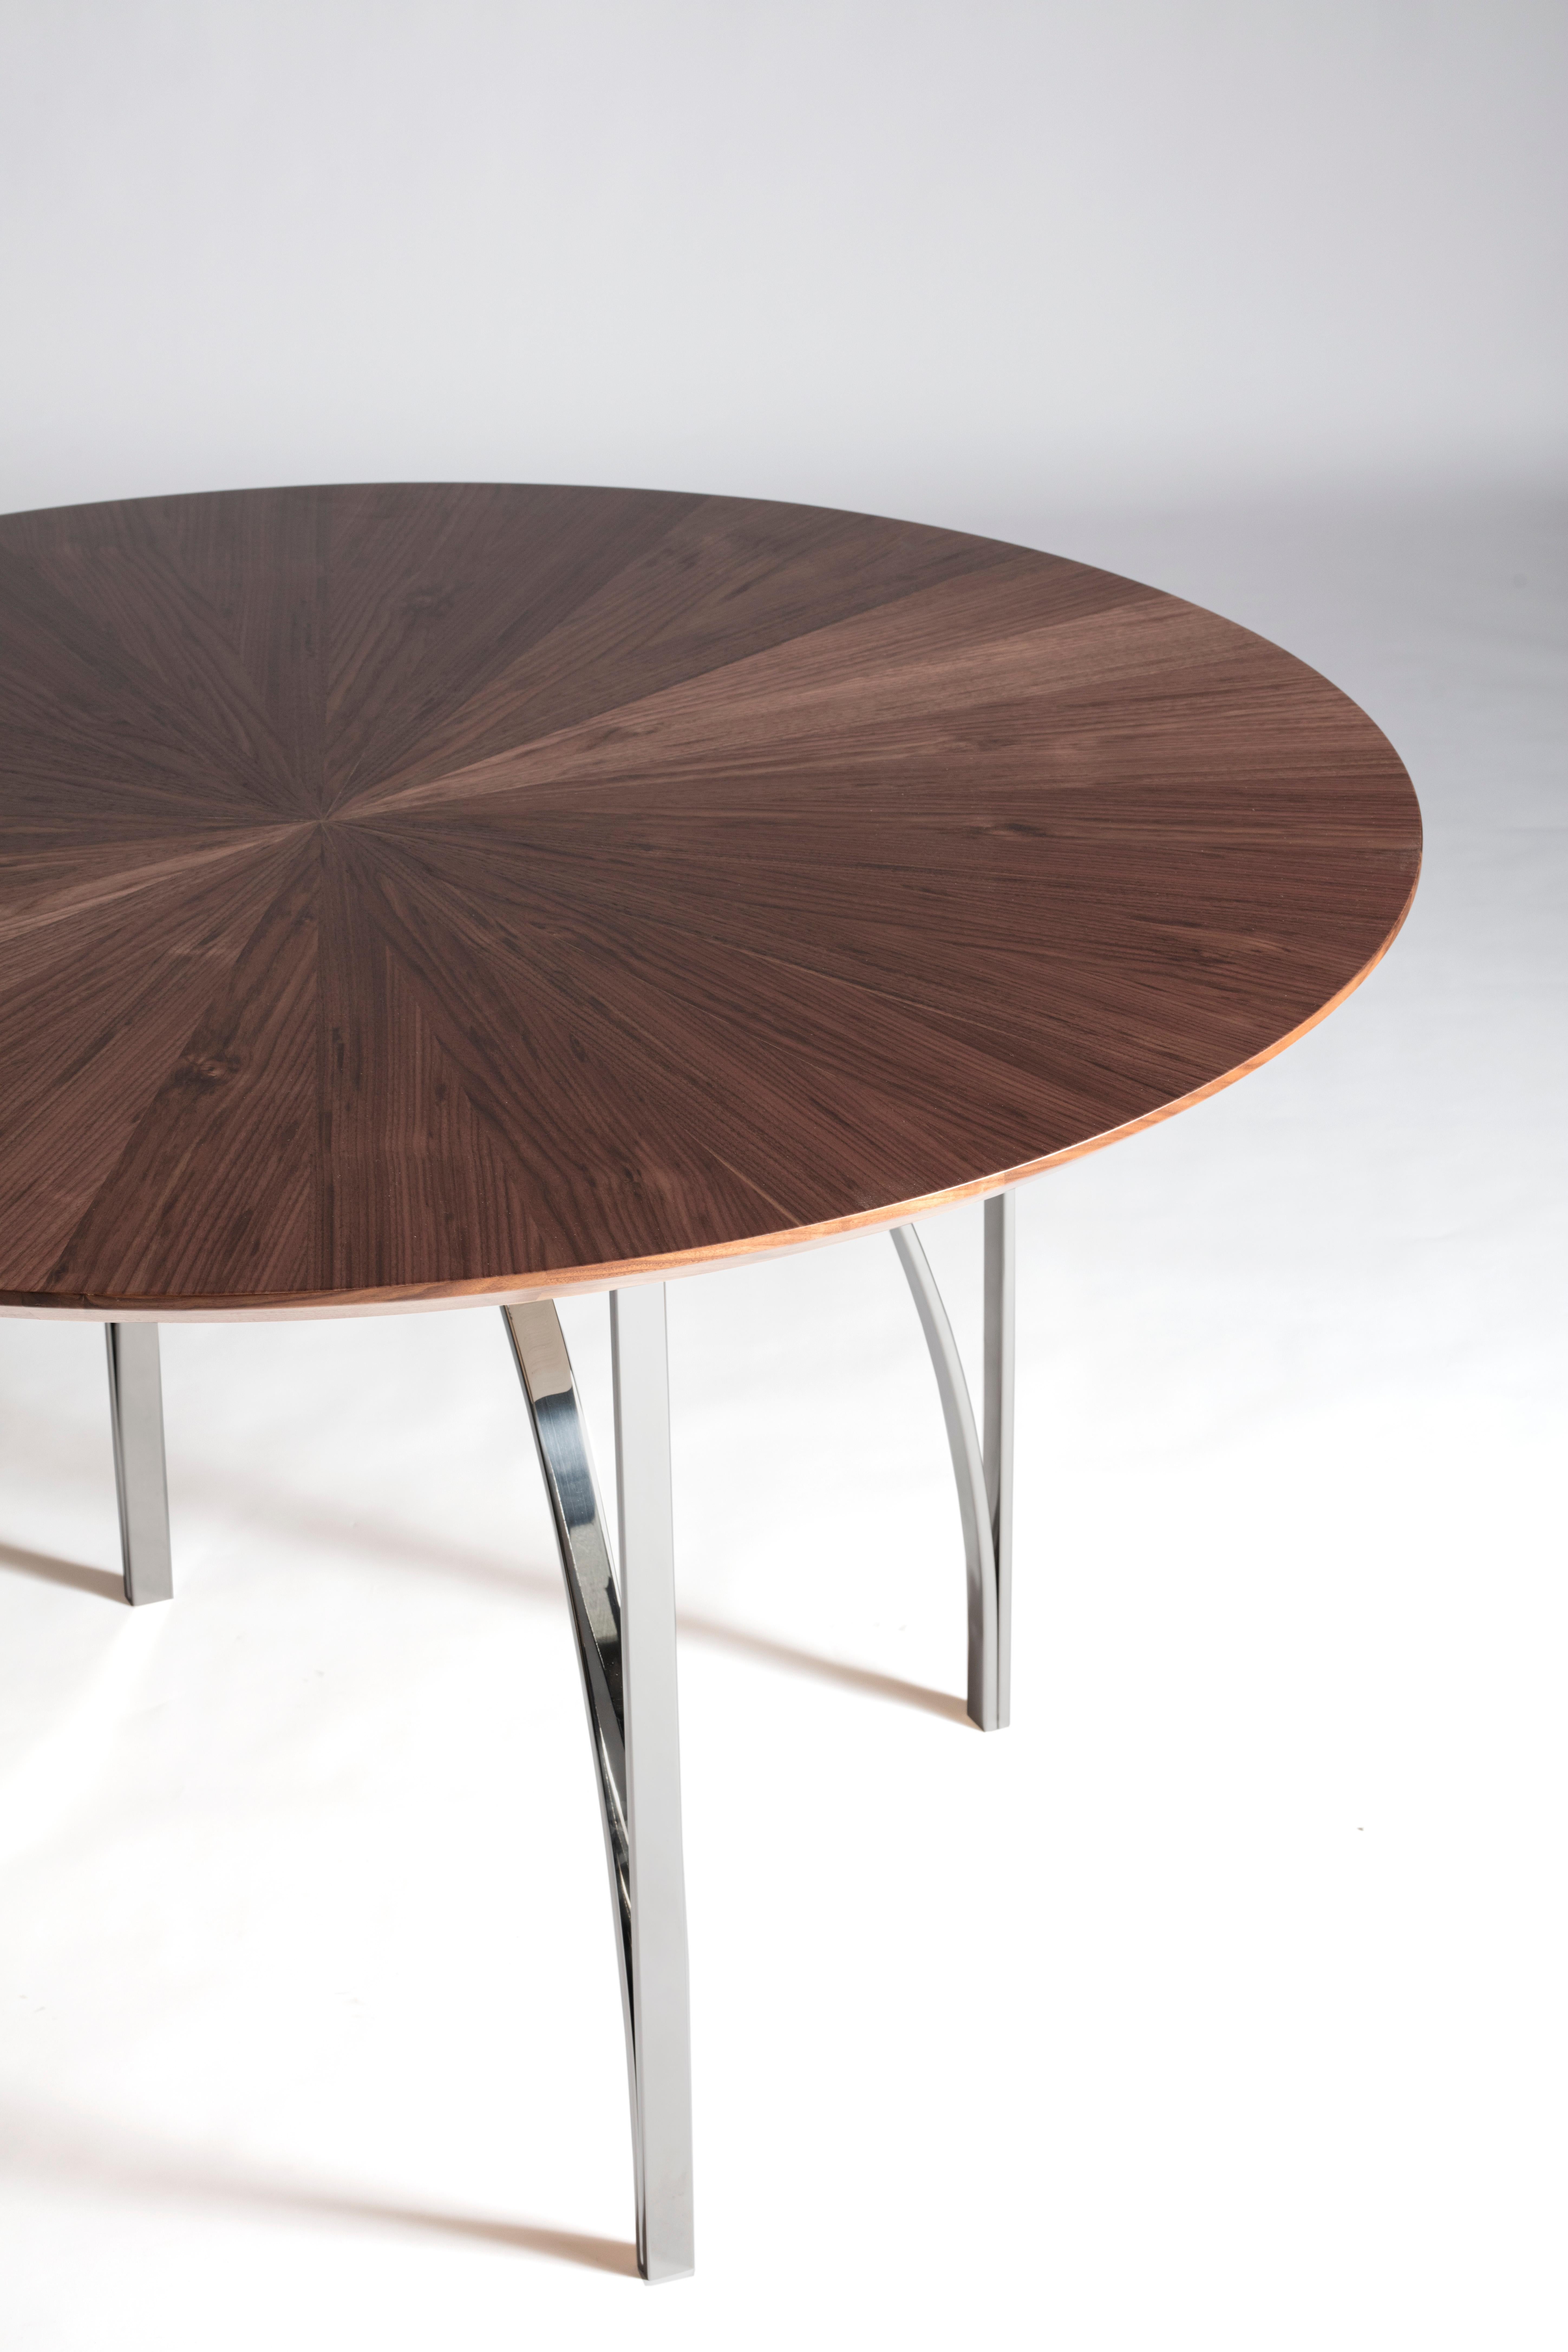 Contemporary Dining Center Table Serena Confalonieri Medulum Wood Steel Walnut For Sale 1